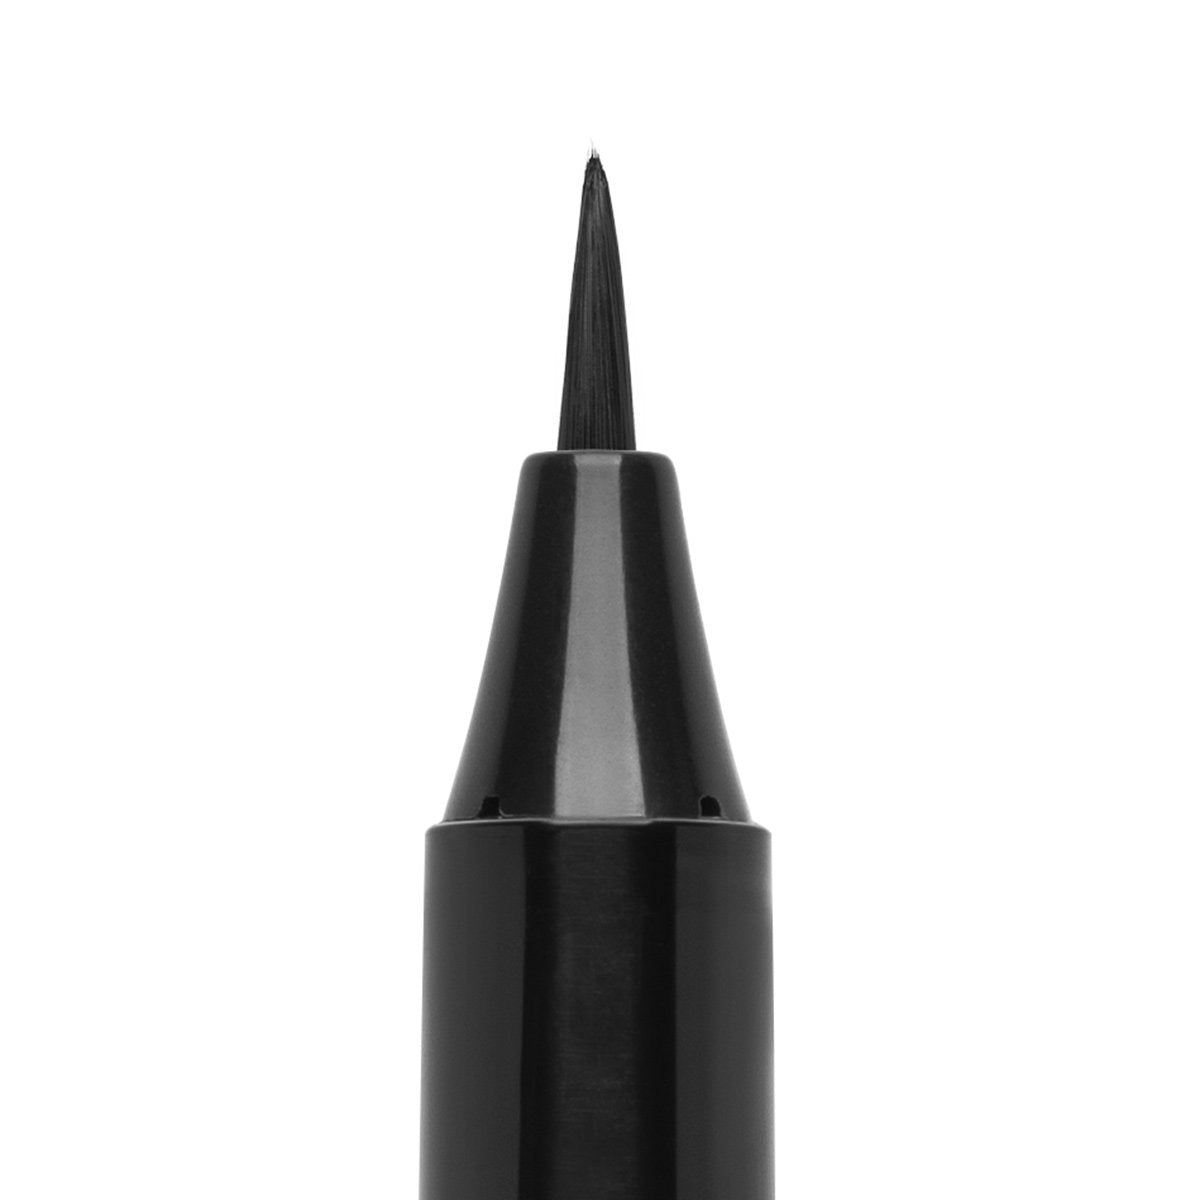 CHAT NOIR - INKY BLACK - long-wearing liquid eyeliner with precise brush tip in black ink shade